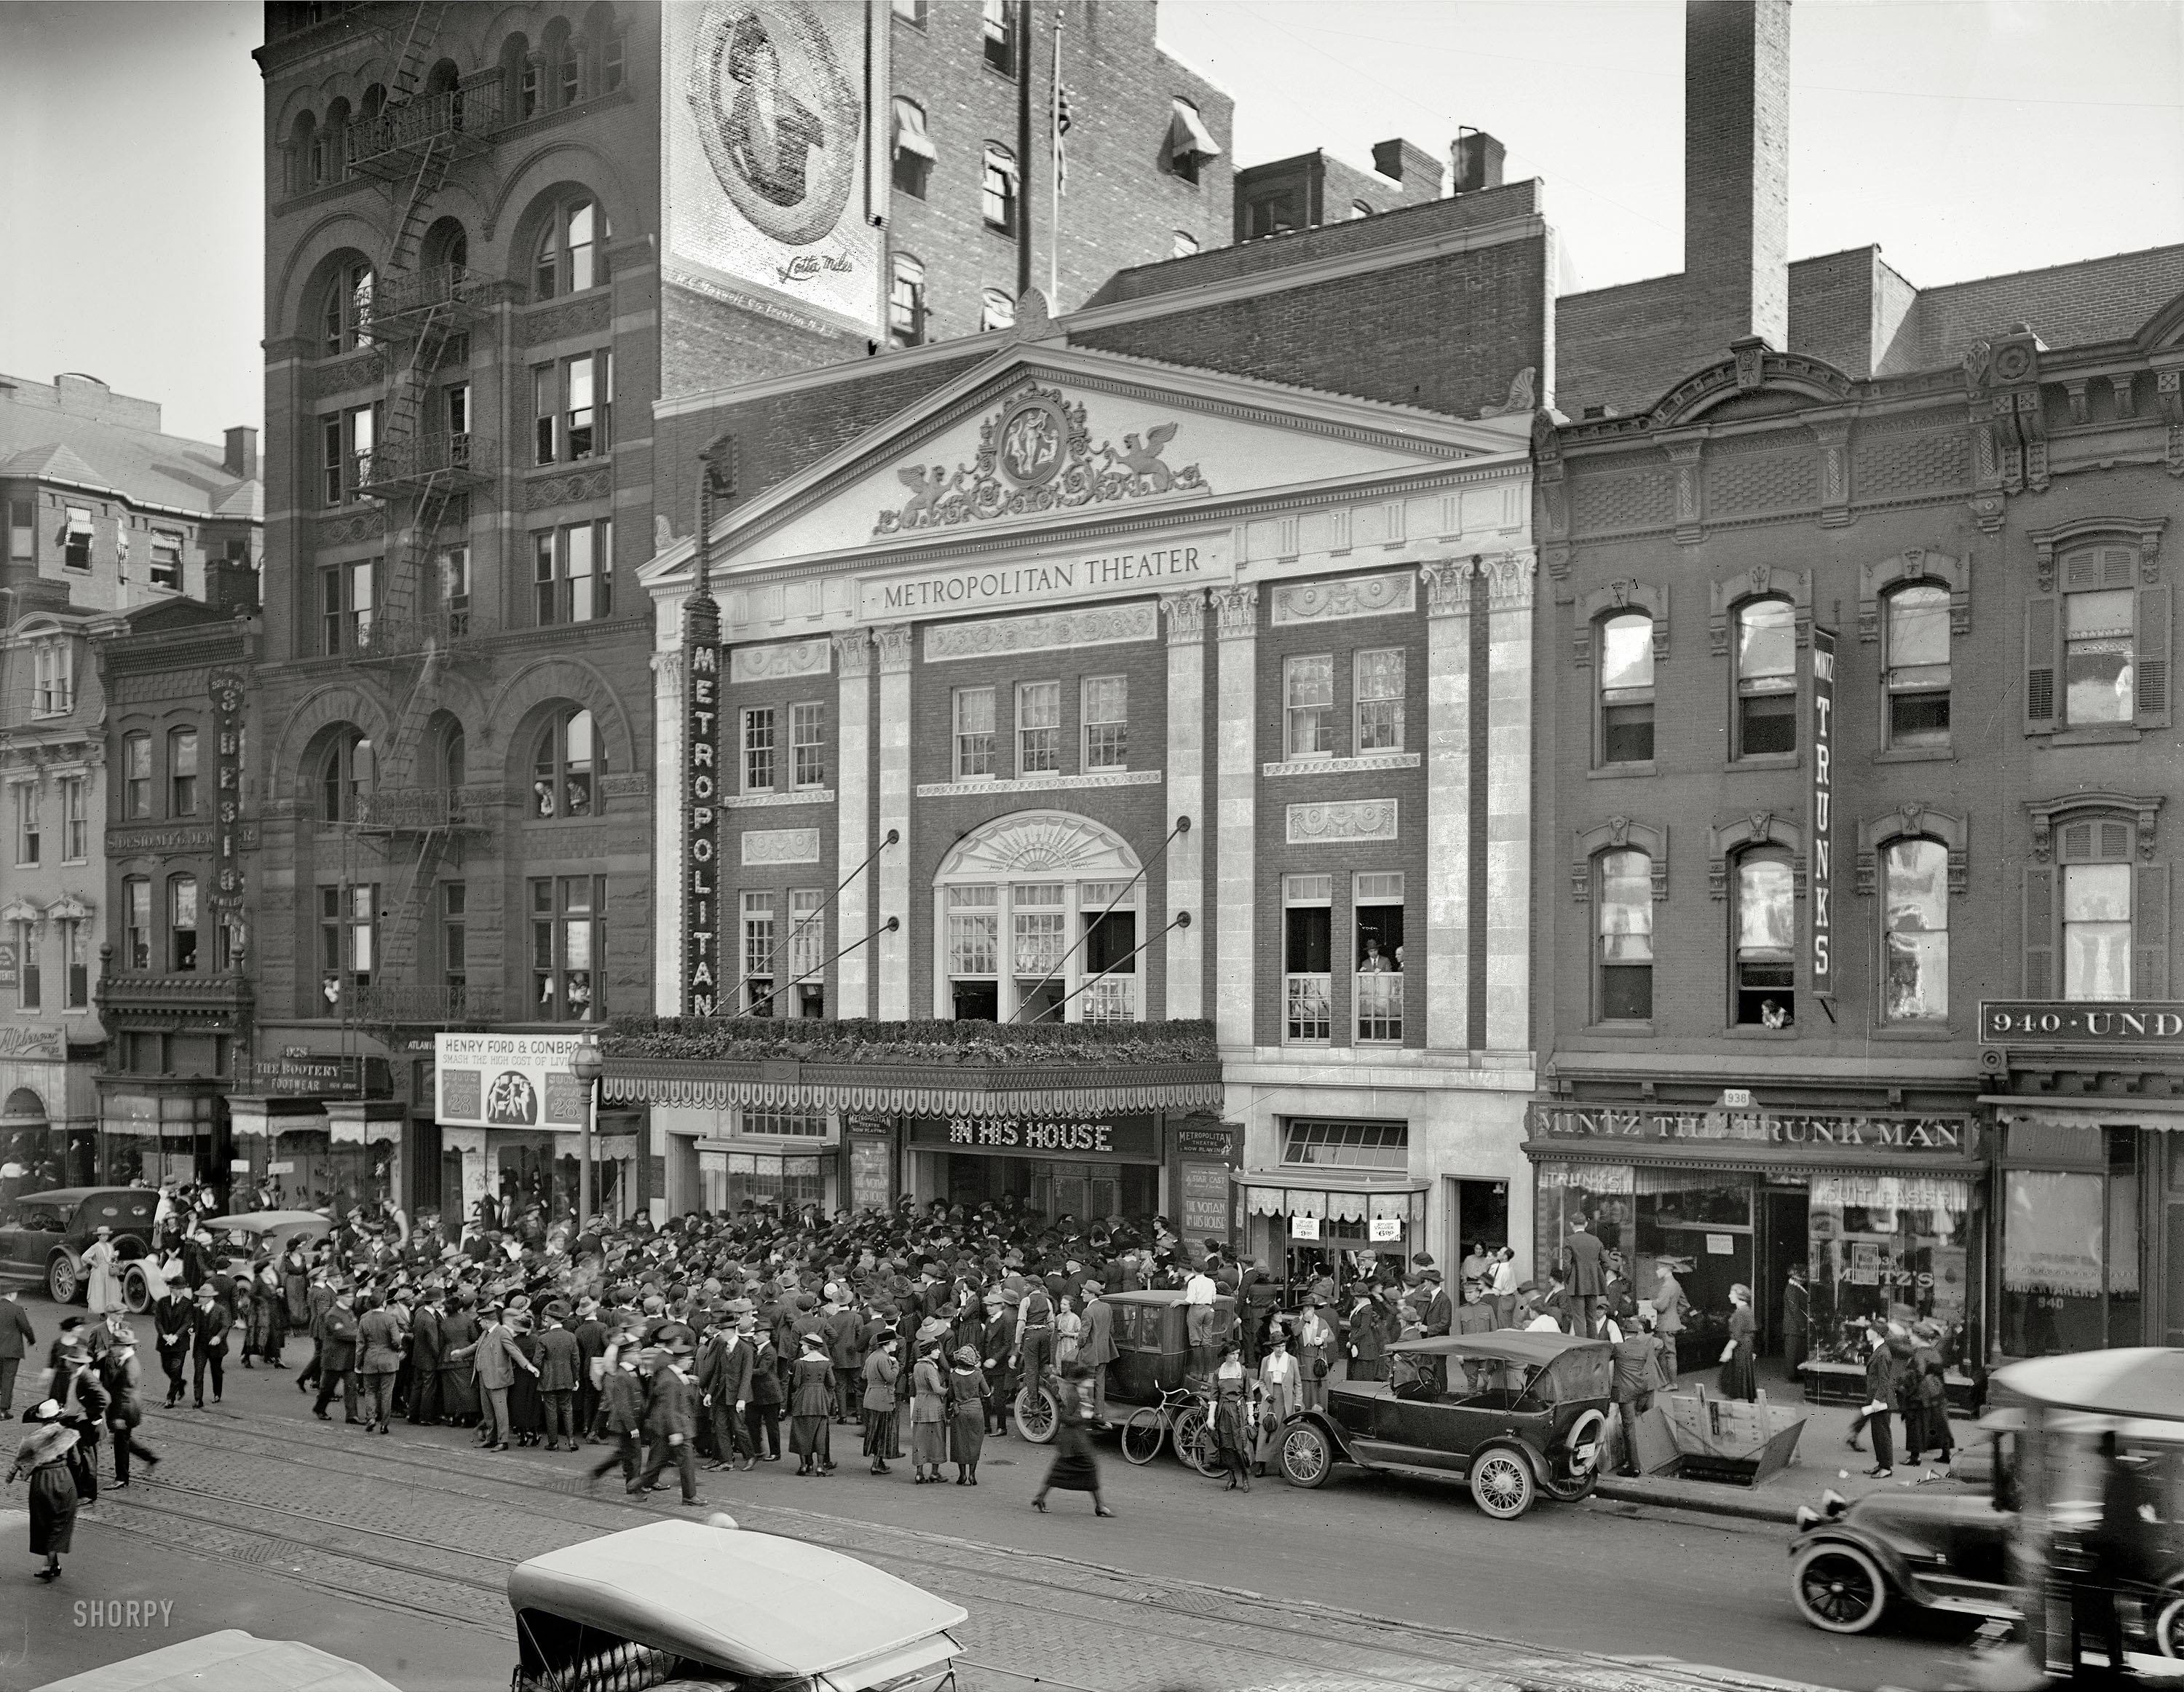 Washington, D.C., circa 1920. "Crowds at Metropolitan Theatre, F Street N.W." National Photo Company Collection glass negative. View full size.